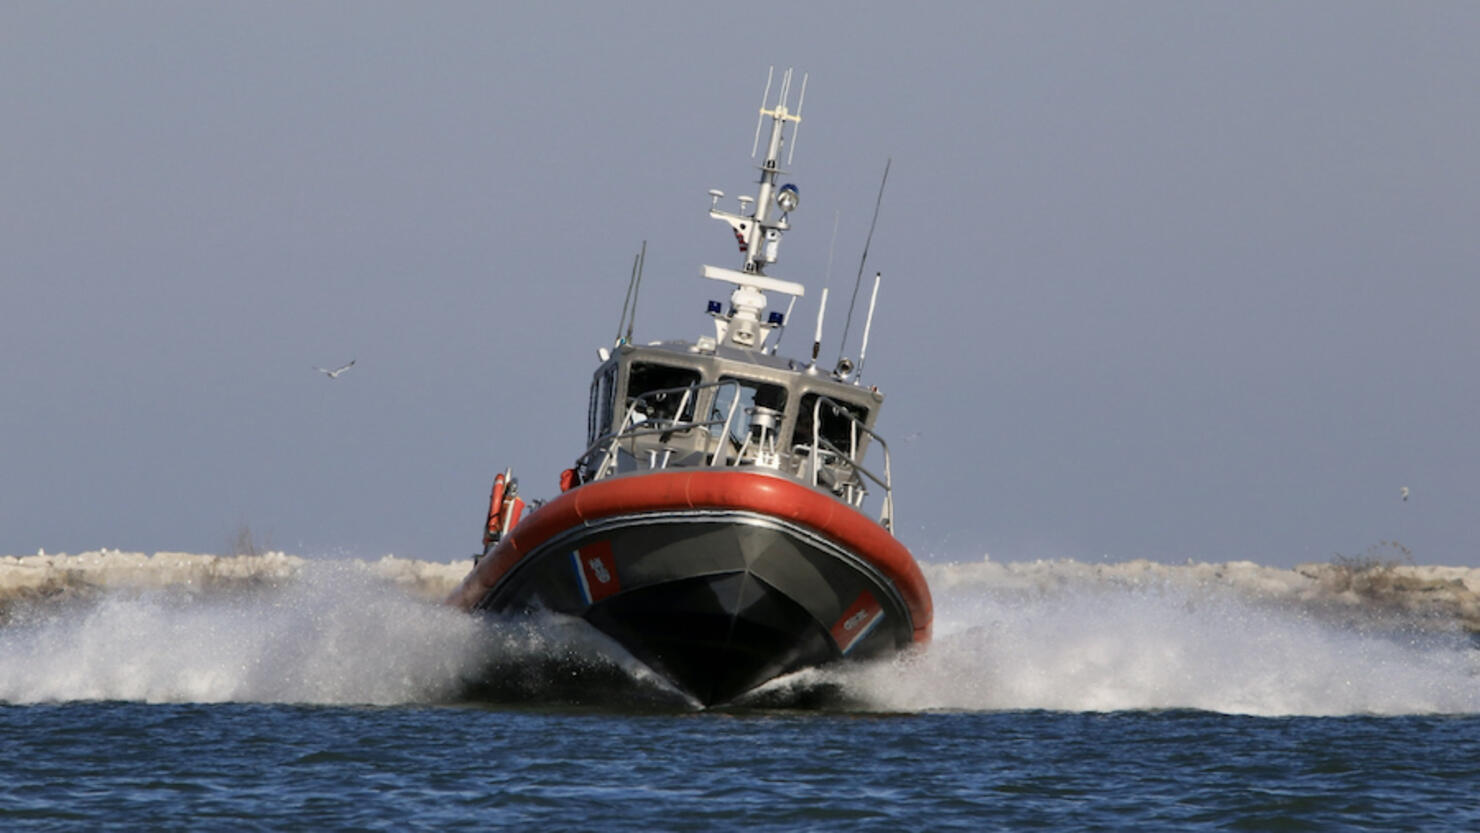 Coast Guard Patrol Boat